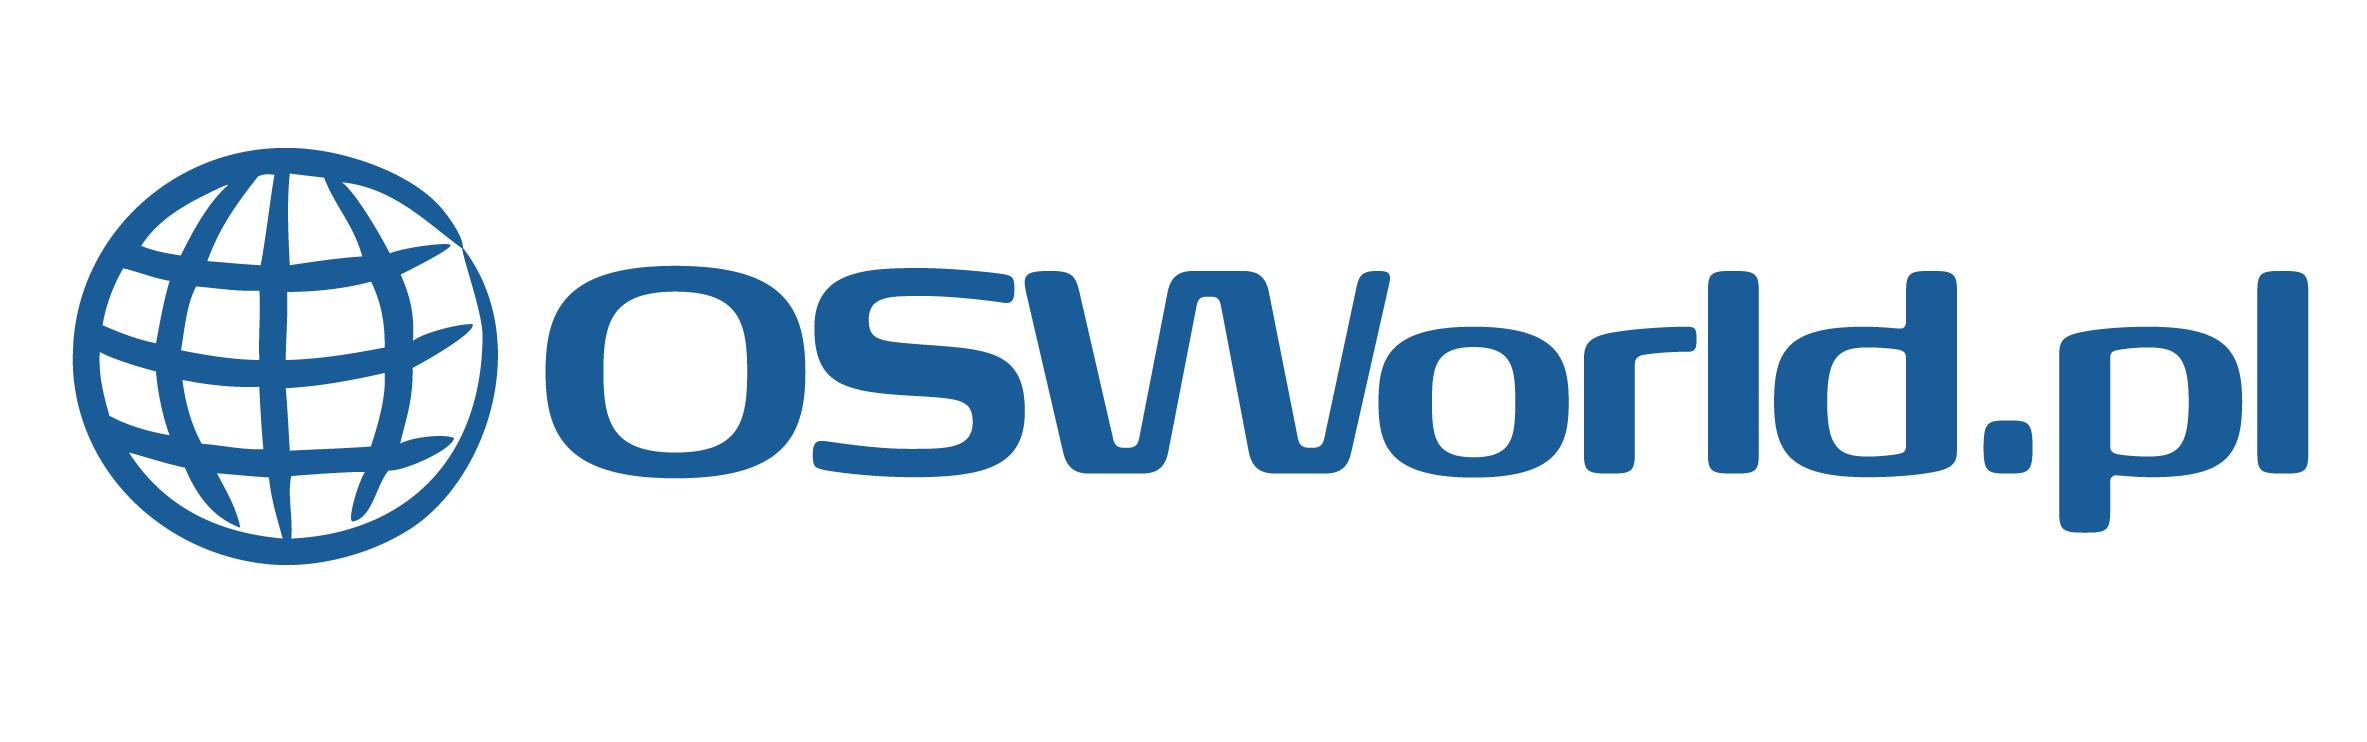 OSWorld.pl